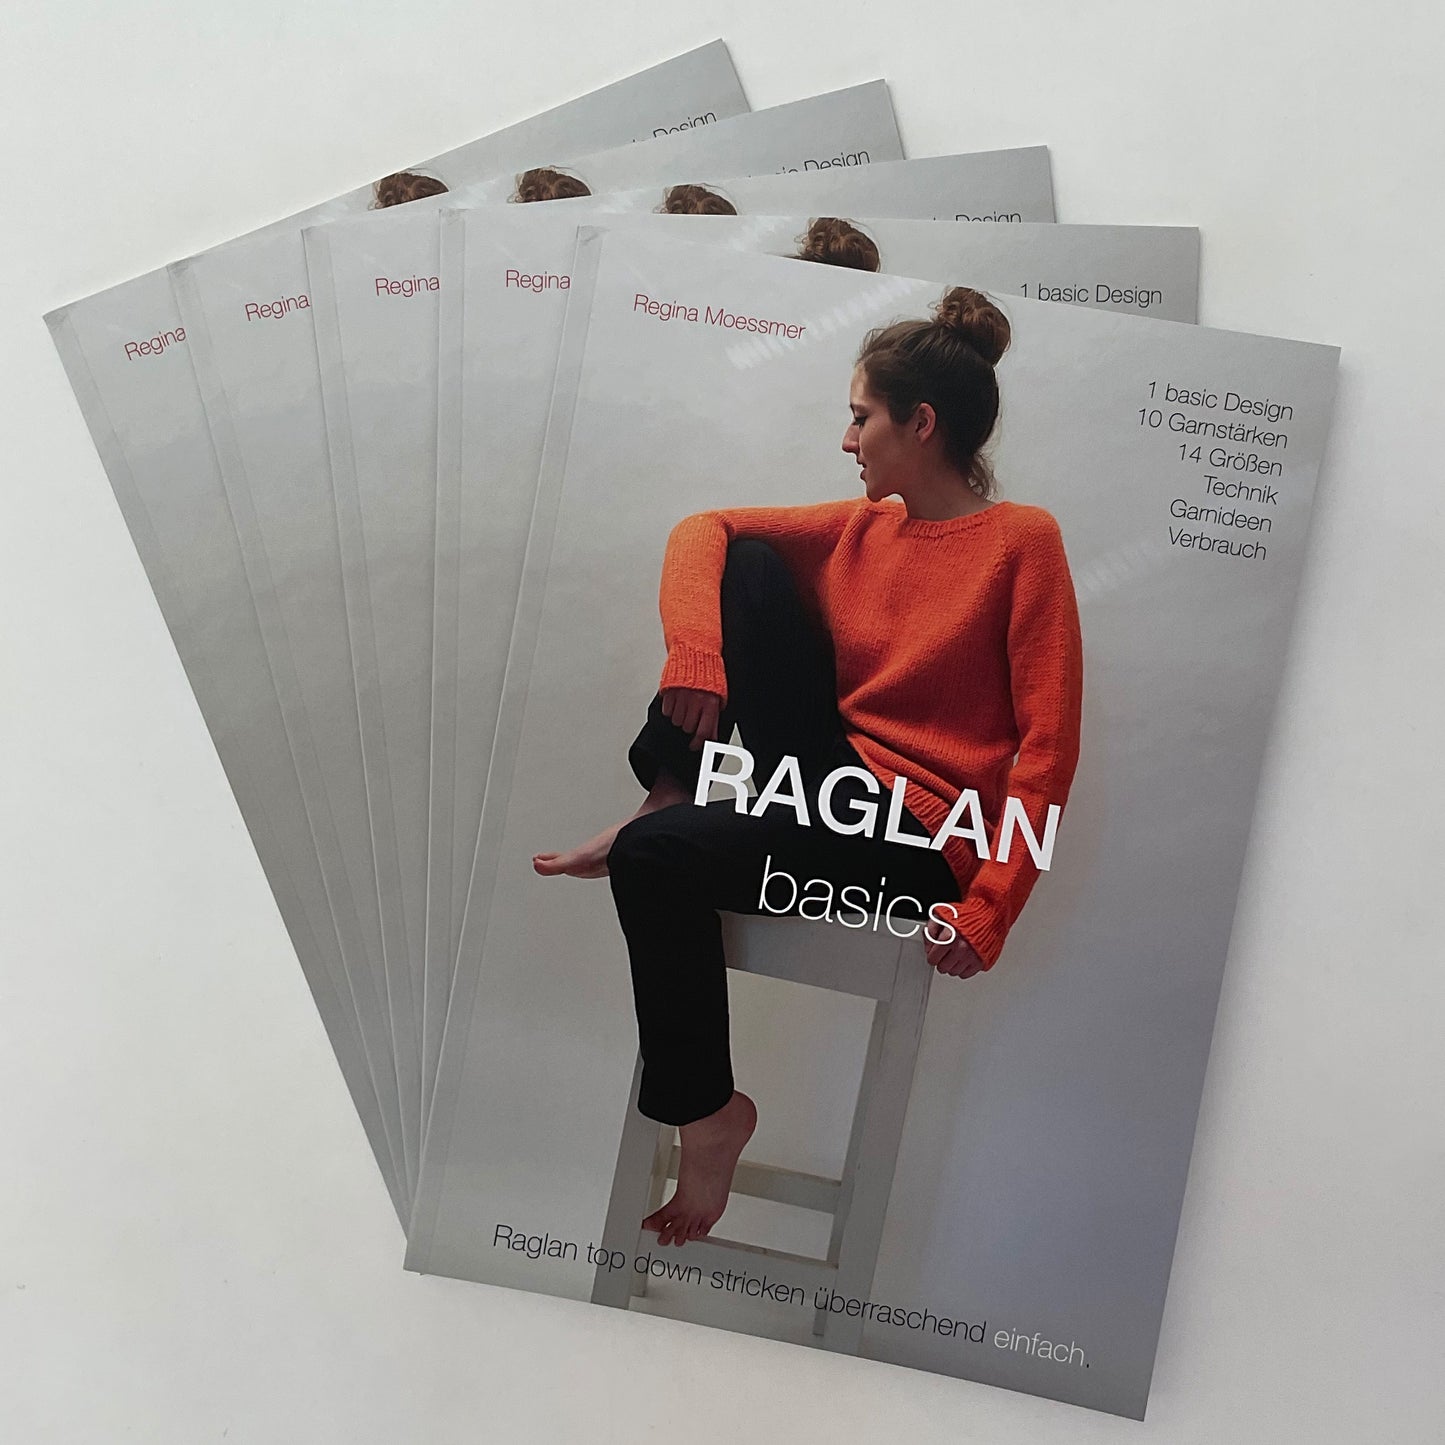 RAGLAN basics - German edition only